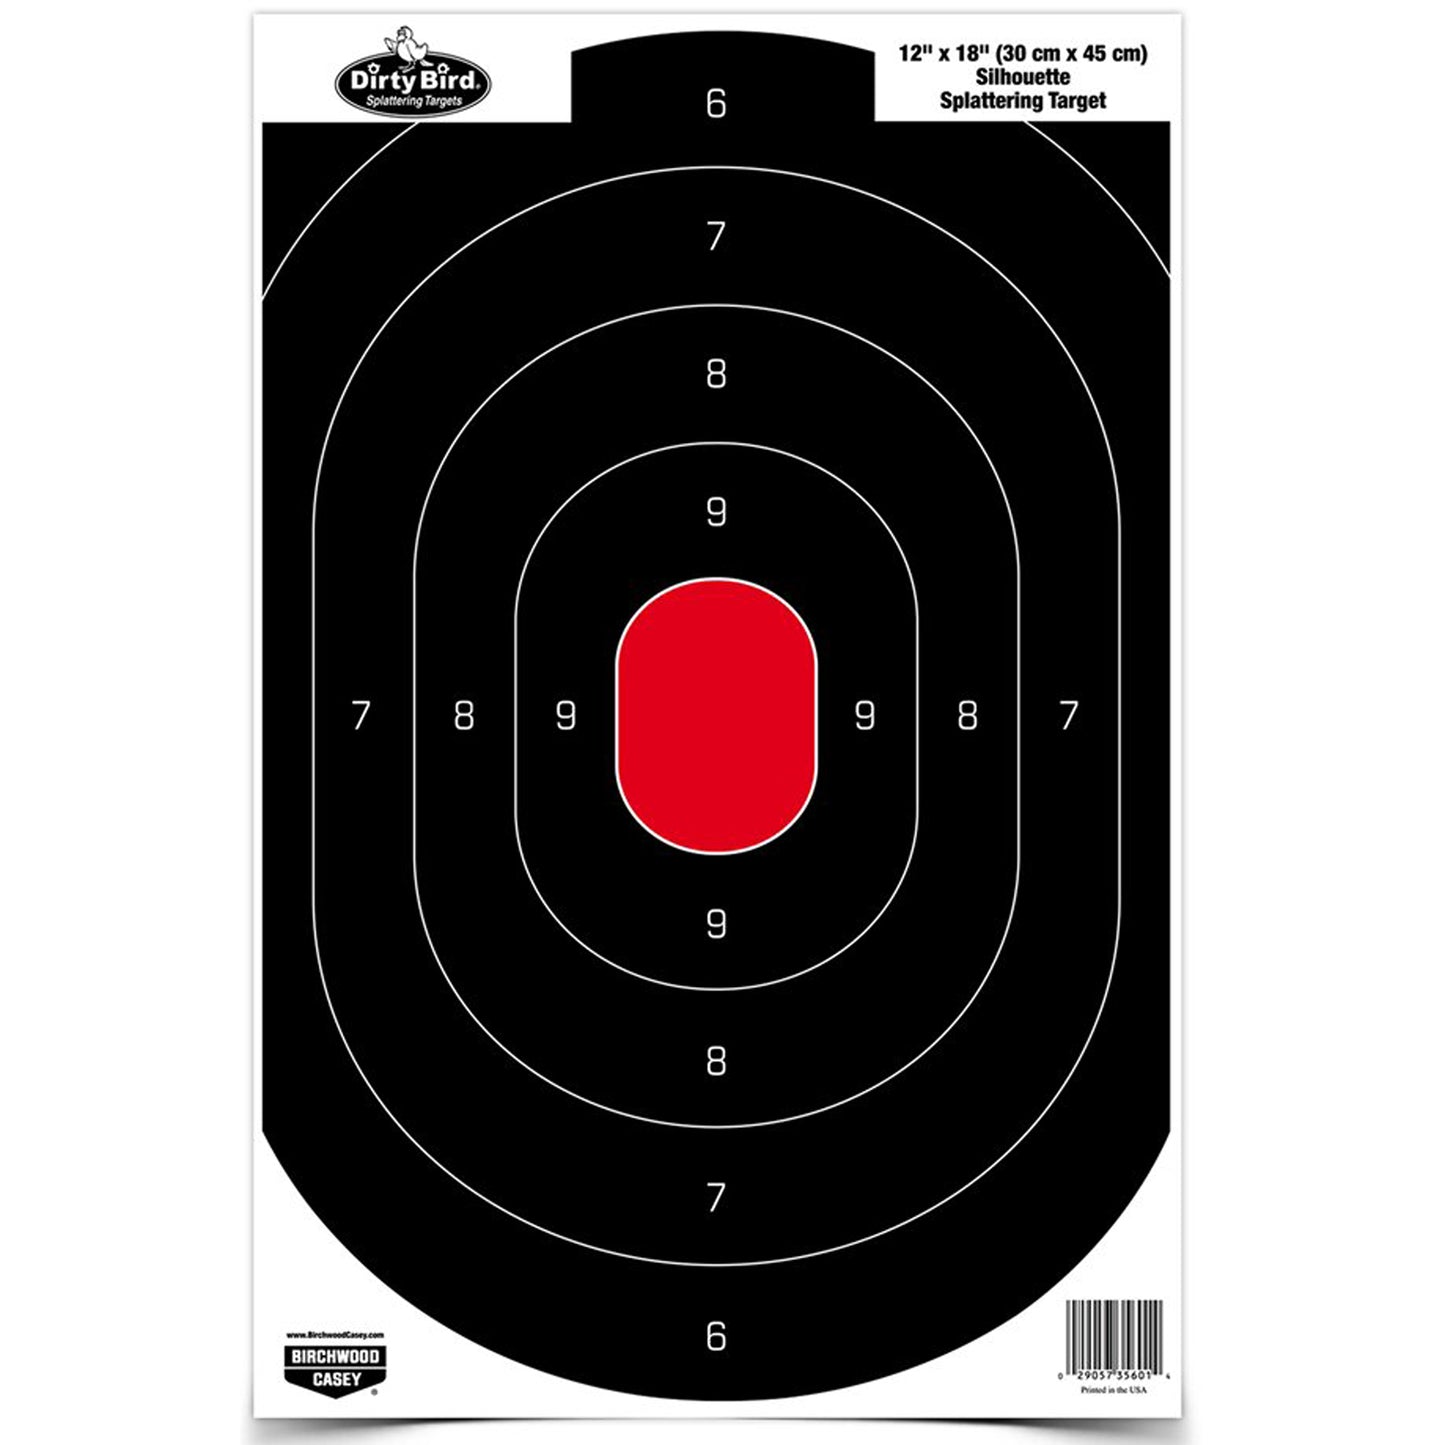 Birchwood Casey Dirty Bird Target Silhouette, 12x18, 8 Targets BC-35608 - California Shooting Supplies